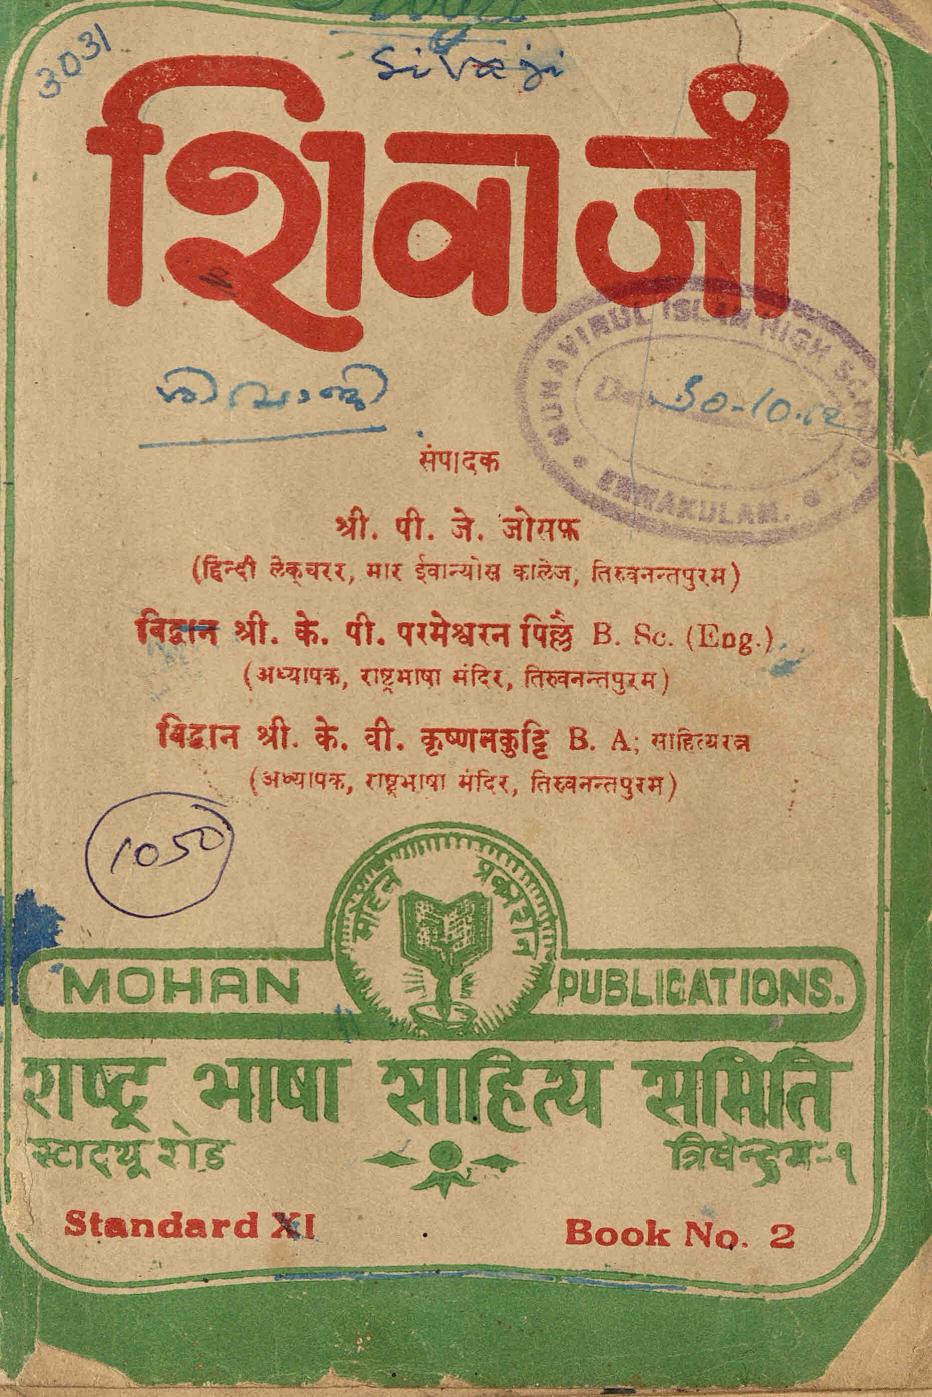  1957 - Sivaji - Drama Standard 11 Book 02